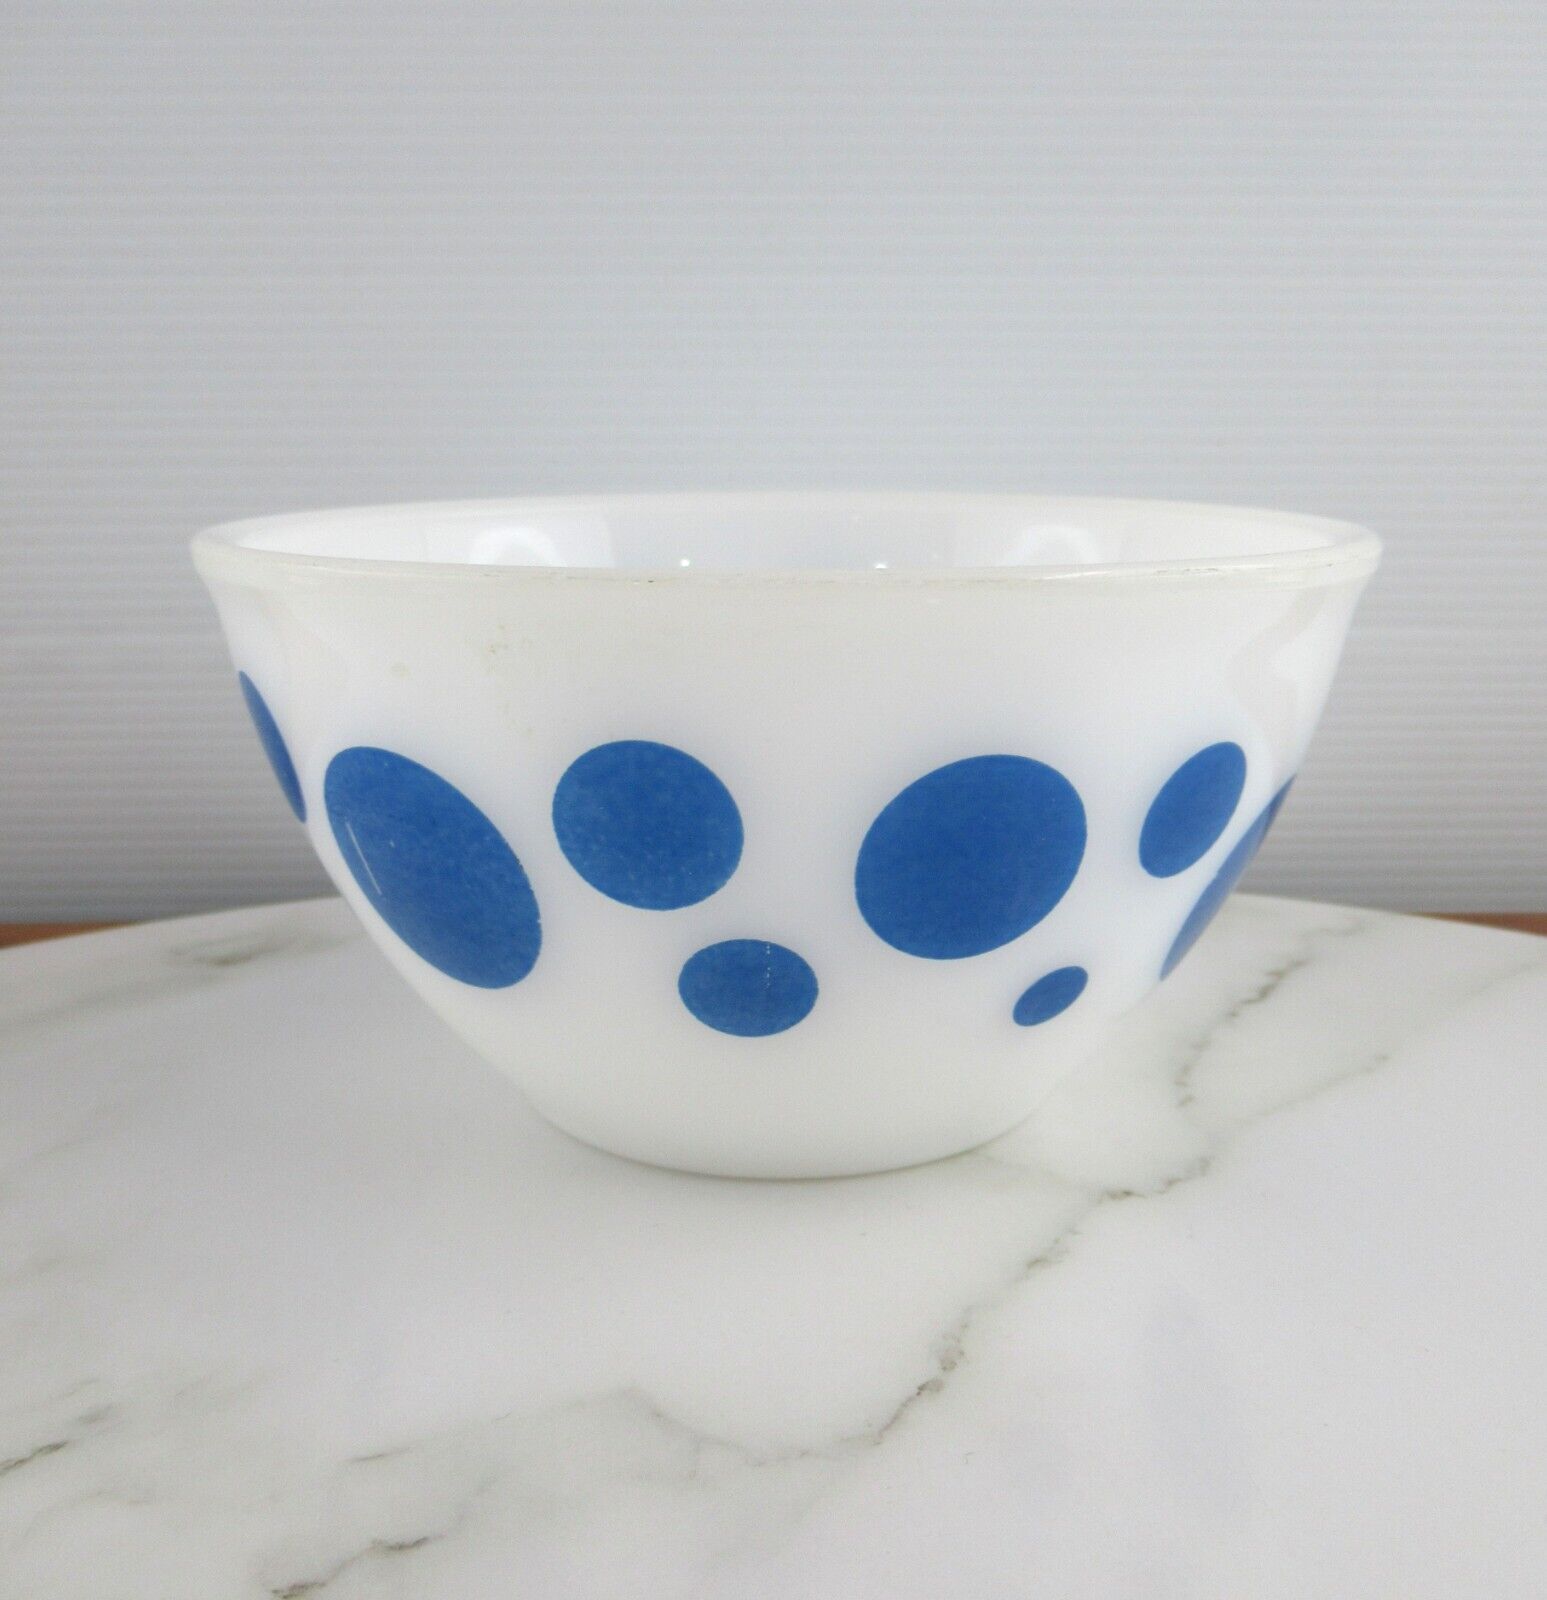 Small Vintage Agee Pyrex Australia Blue Polka Dot Mixing Bowl, 5 Inch Bowl